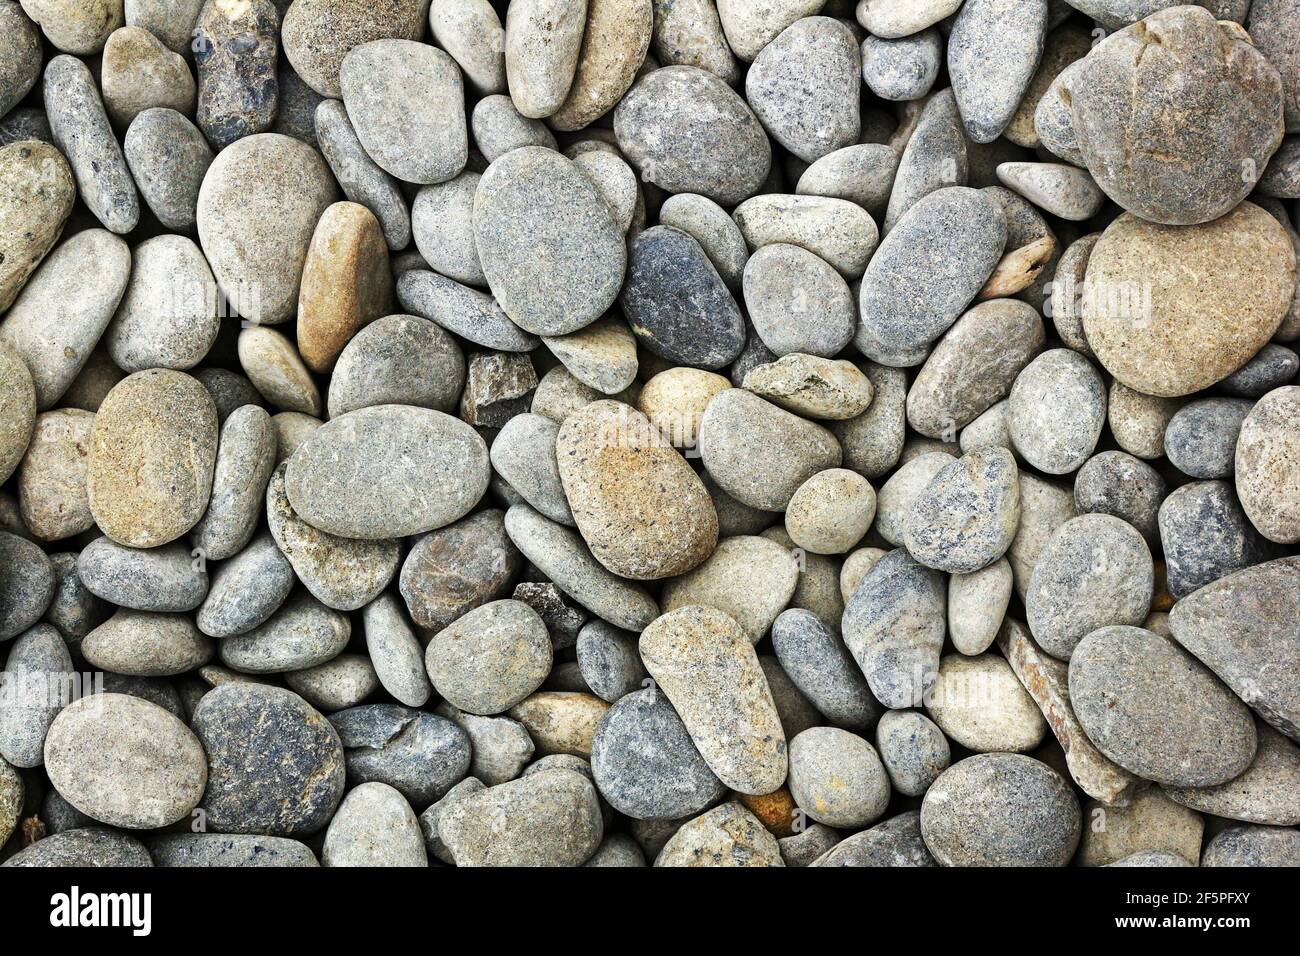 Smooth stones found on the beach. Stock Photo